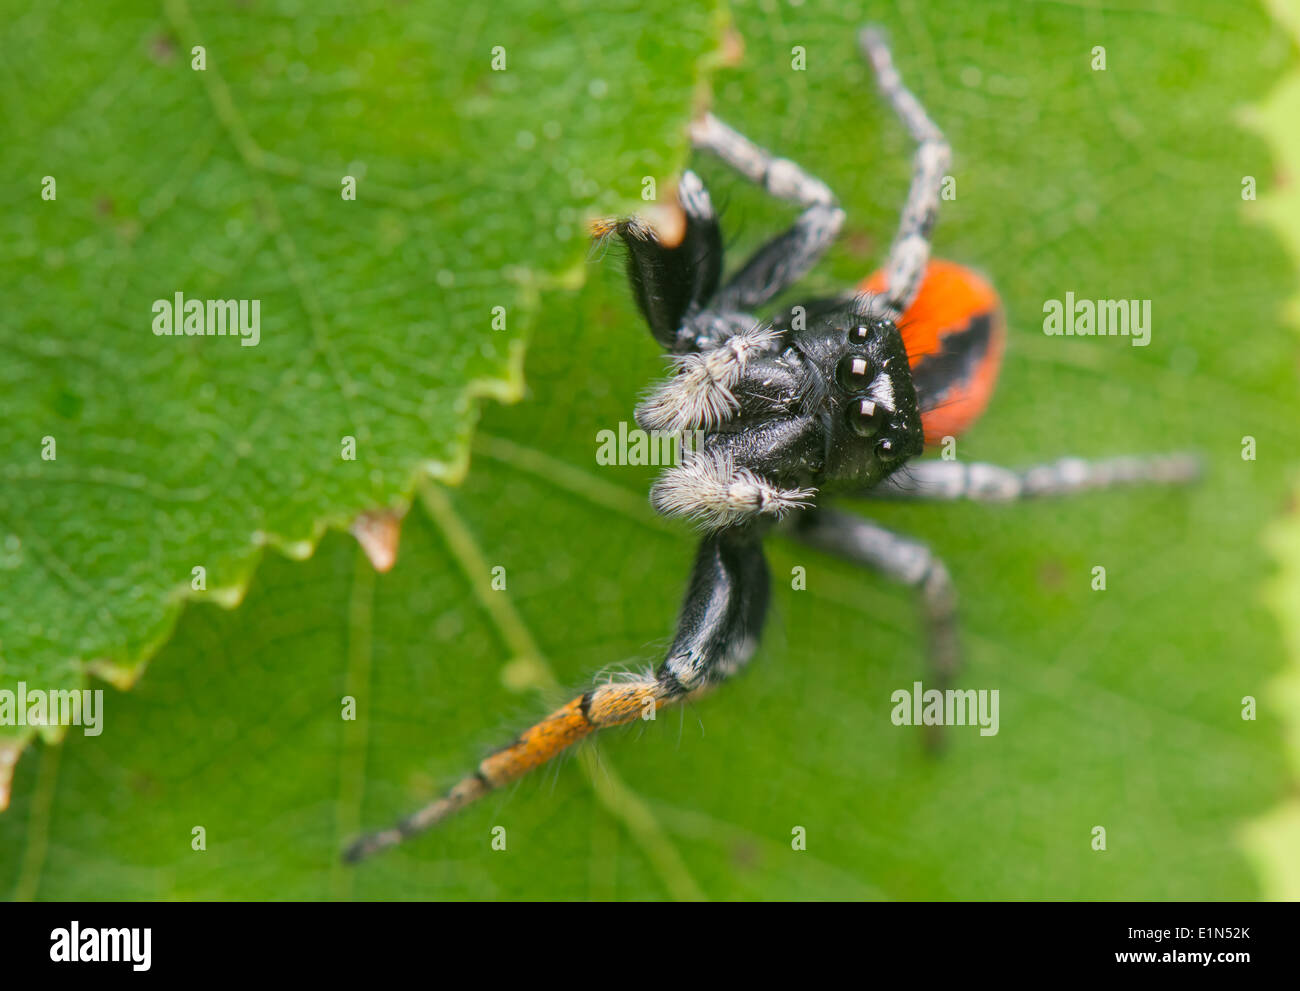 Philaeus chrysops - Jumping spider Foto de stock